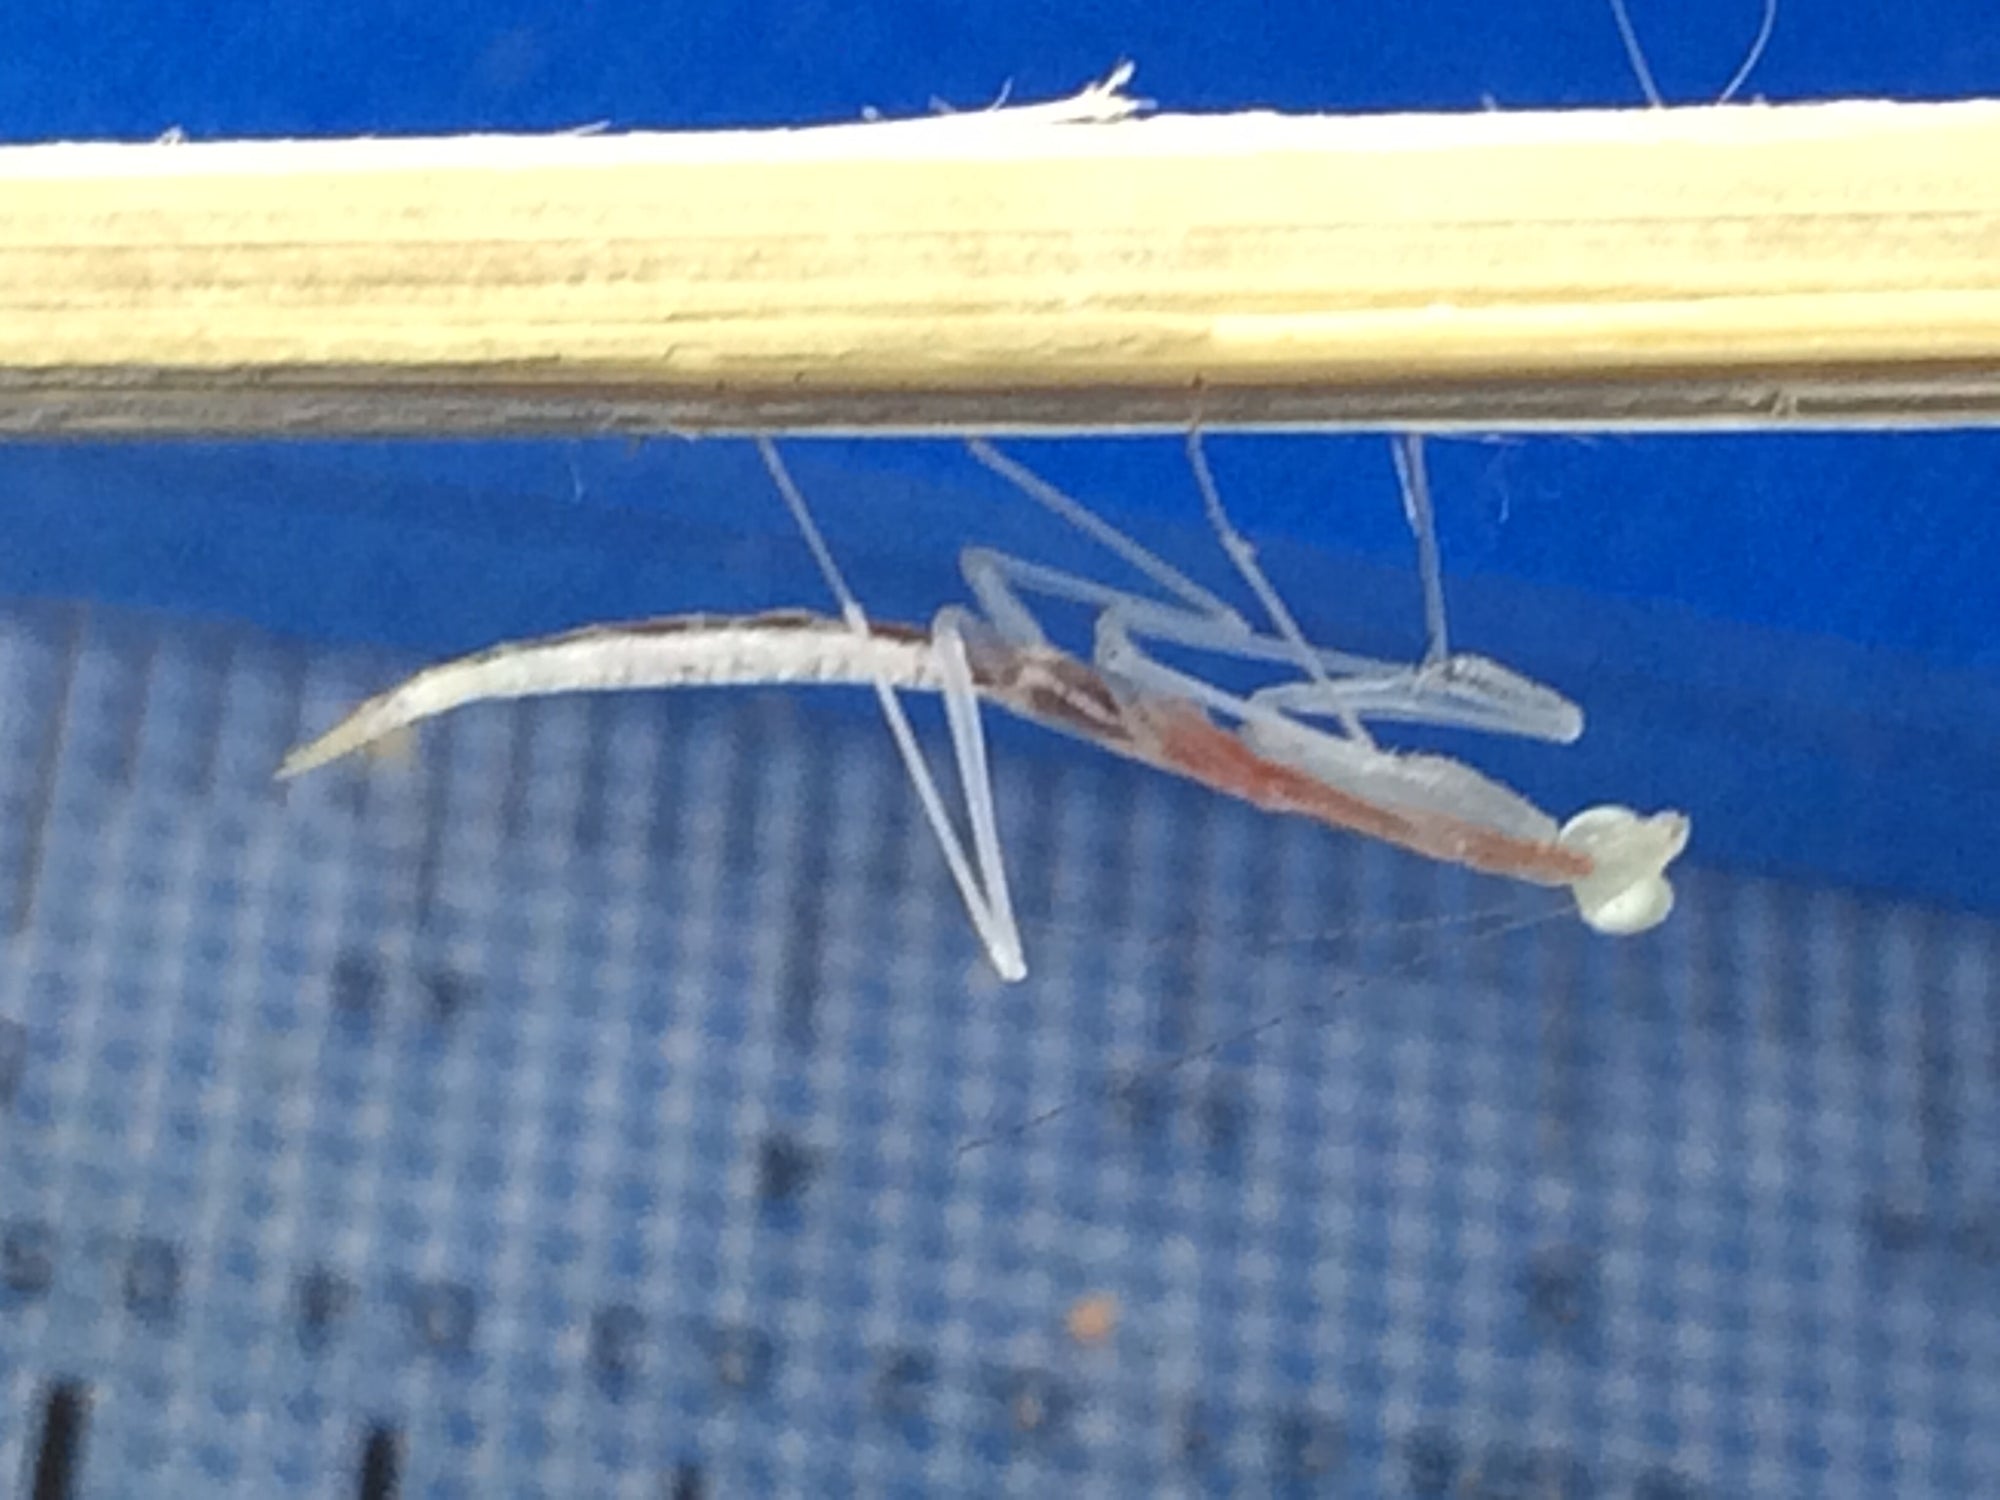 Sinomantis denticulata “Glass Mantis” - USMANTIS